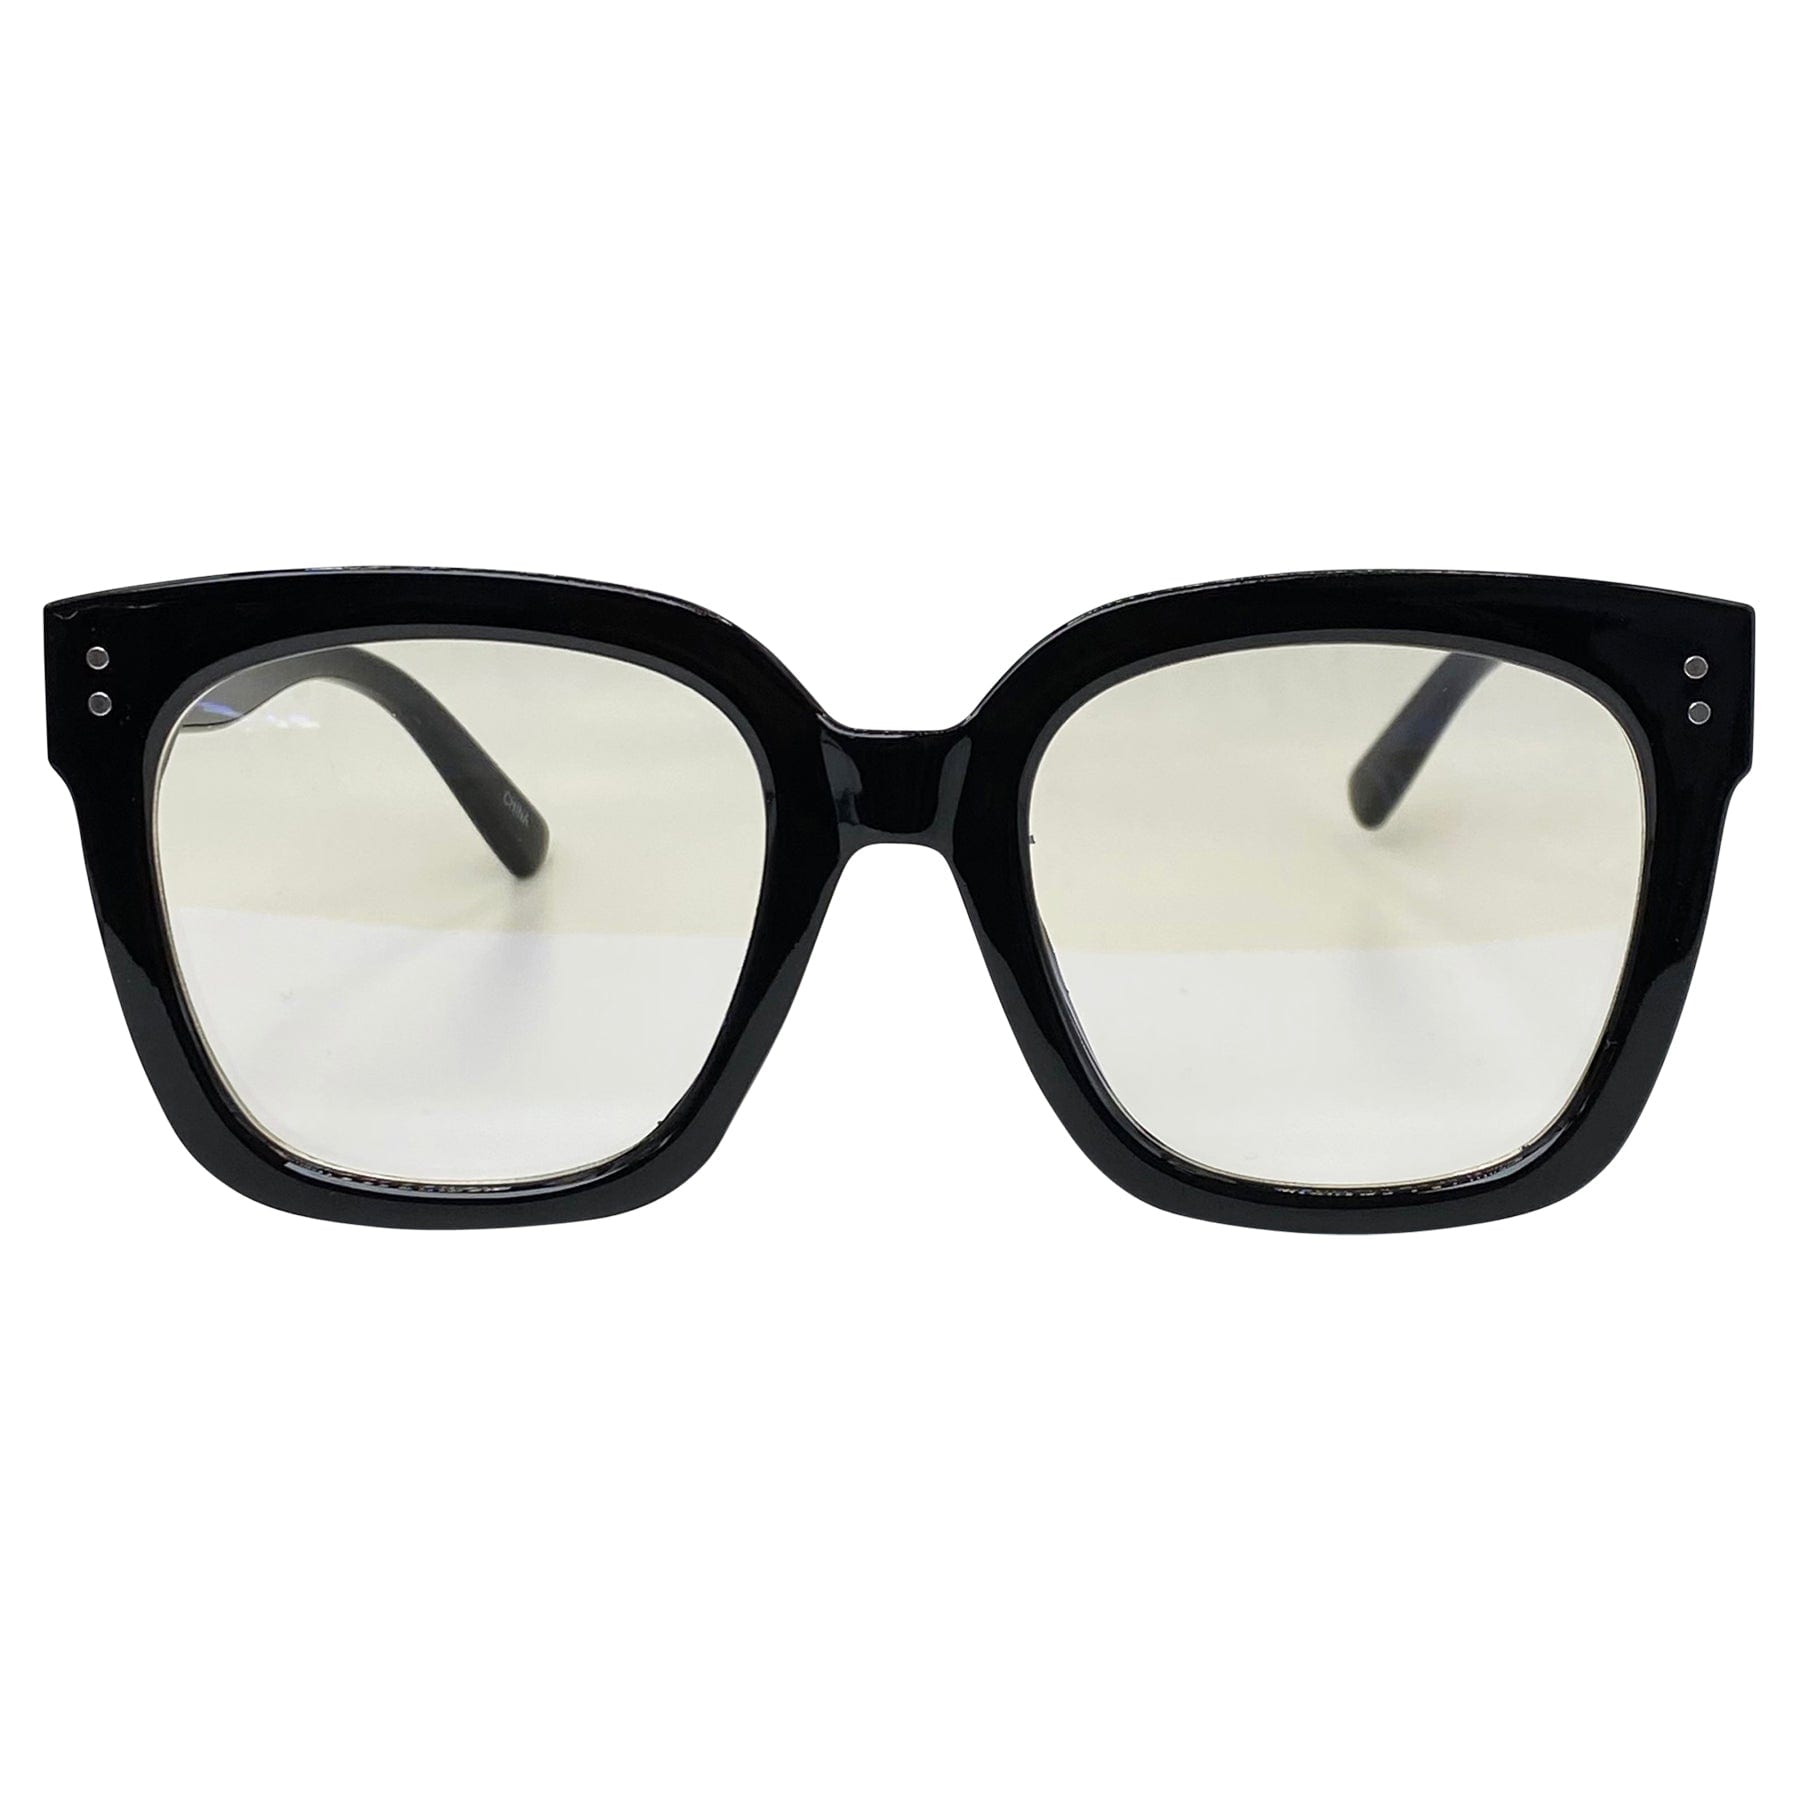 vintage inspired glasses with a black frame and blue light lens